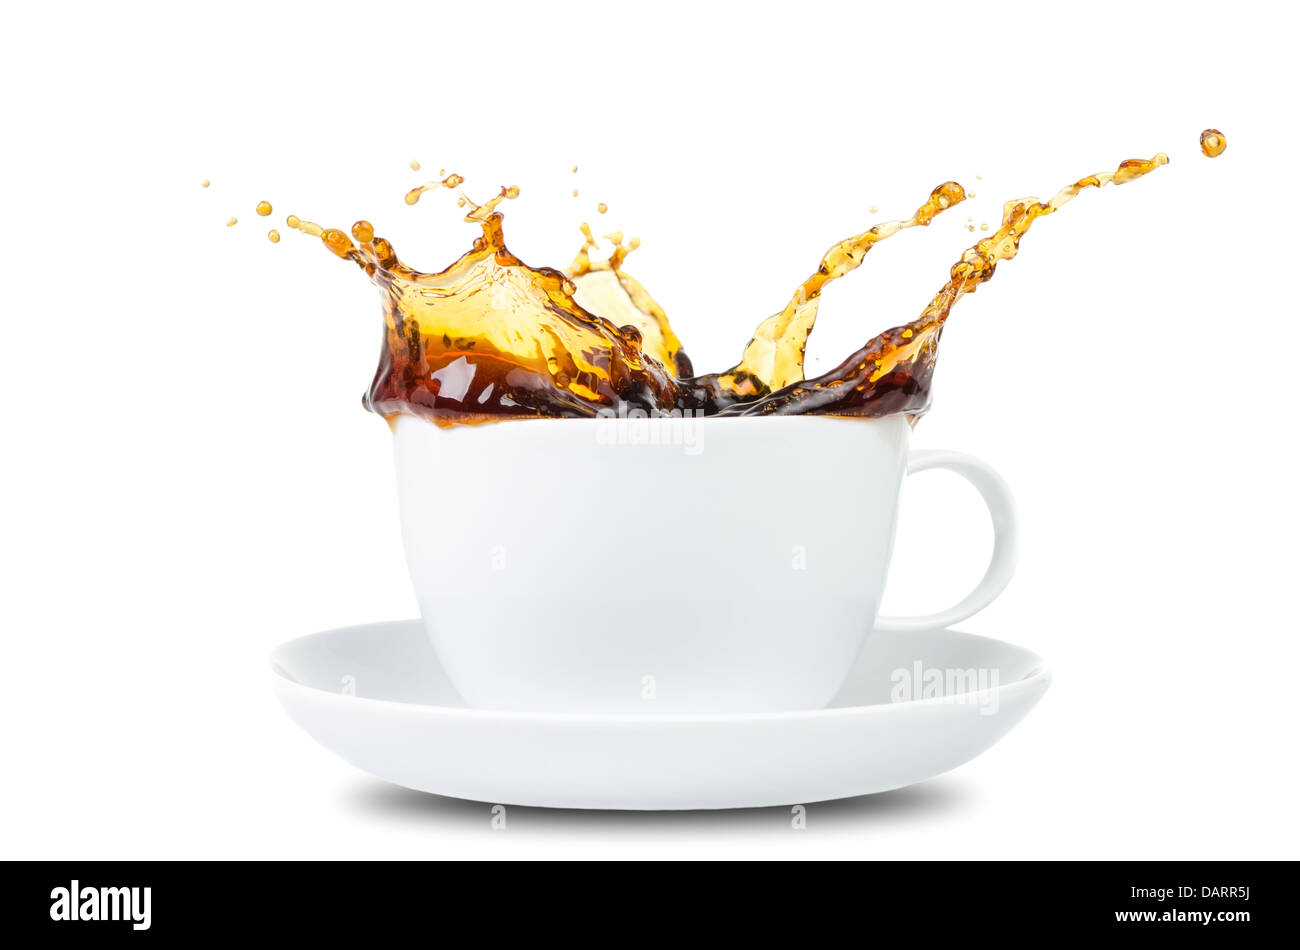 https://c8.alamy.com/comp/DARR5J/coffee-splash-in-a-coffee-cup-before-white-background-DARR5J.jpg